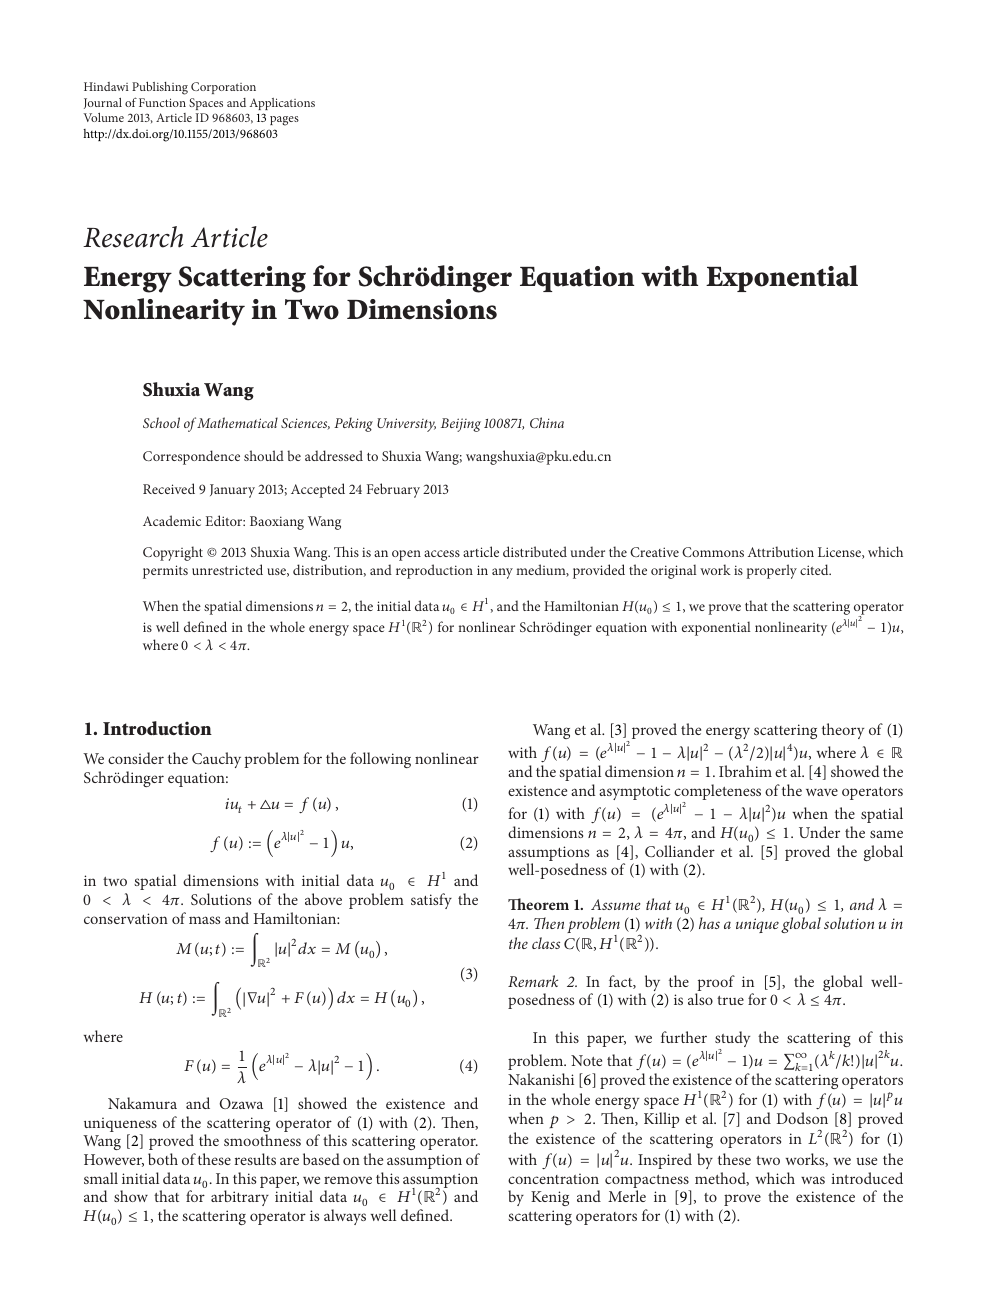 nonlinear schrödinger equation